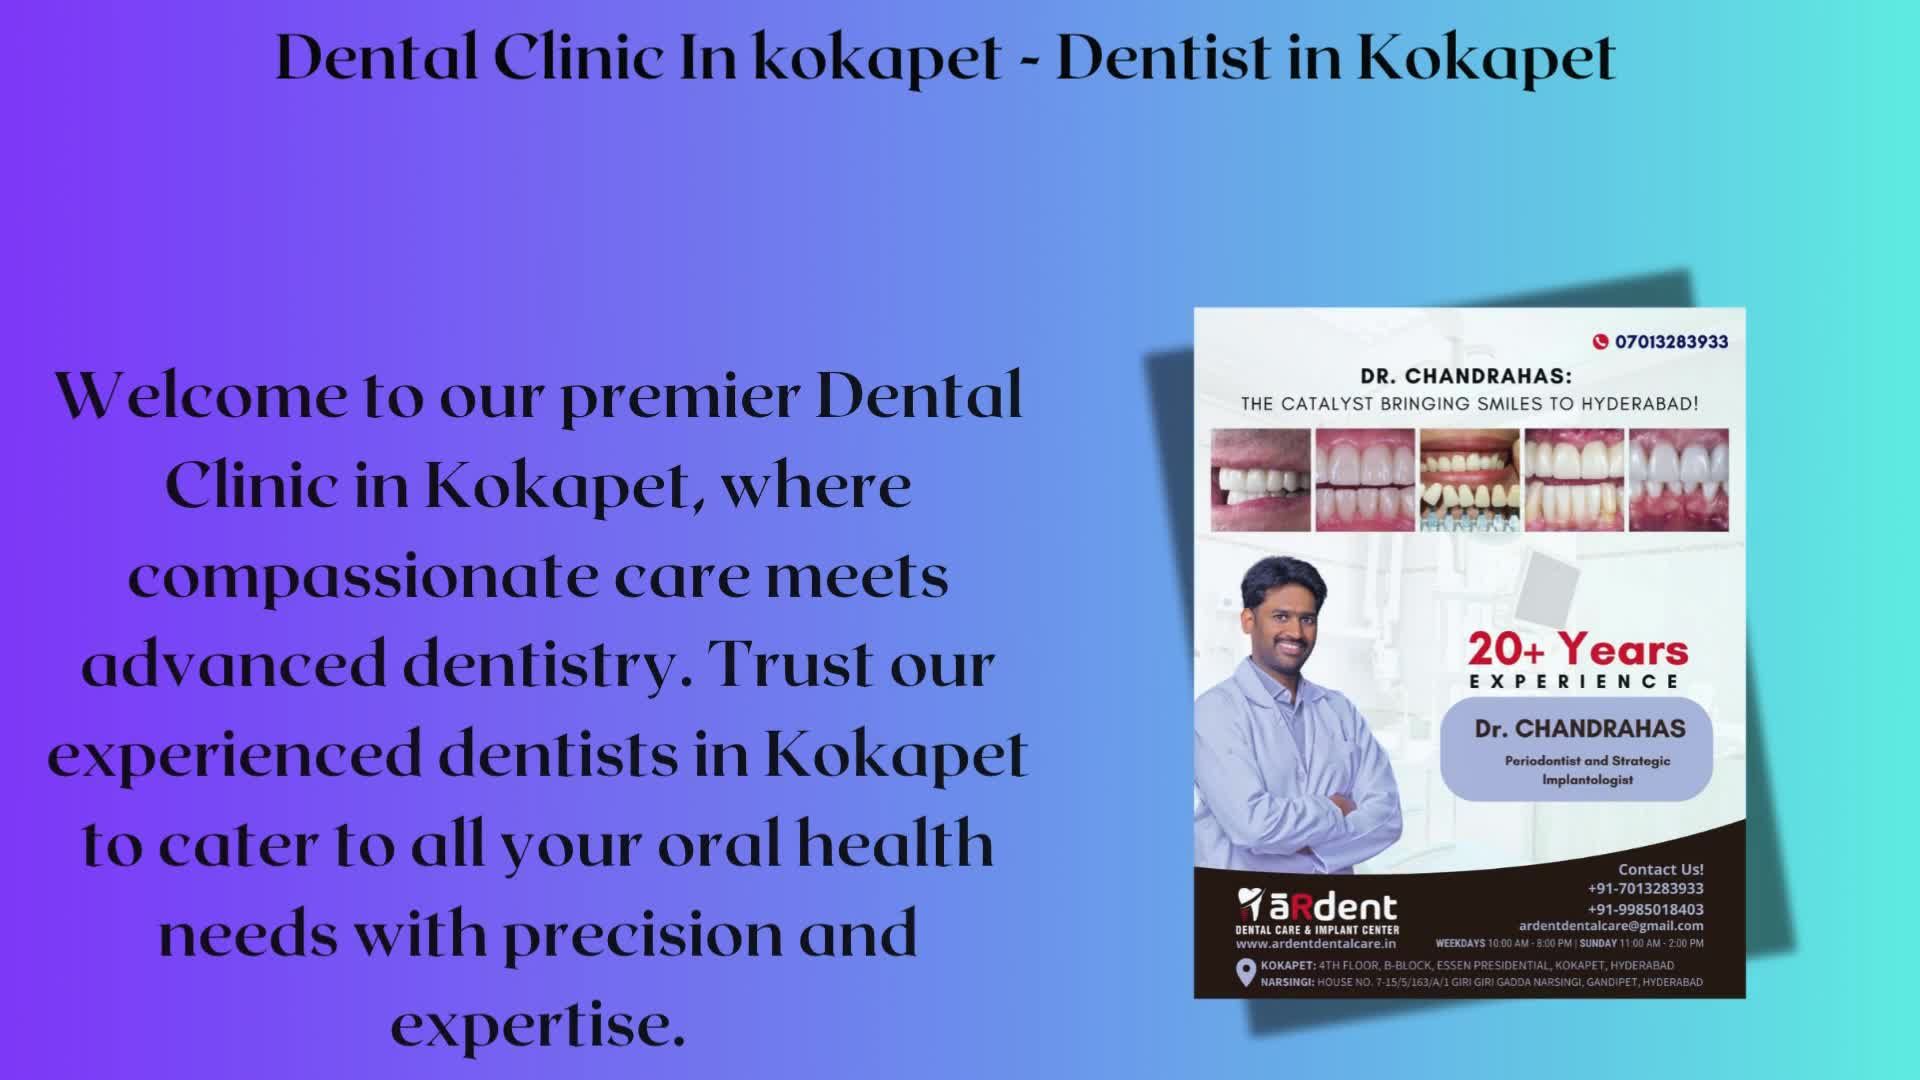 Dropbox - Dental Clinic In Kokapet - Dentist in Kokapet.mp4 - Simplify your life